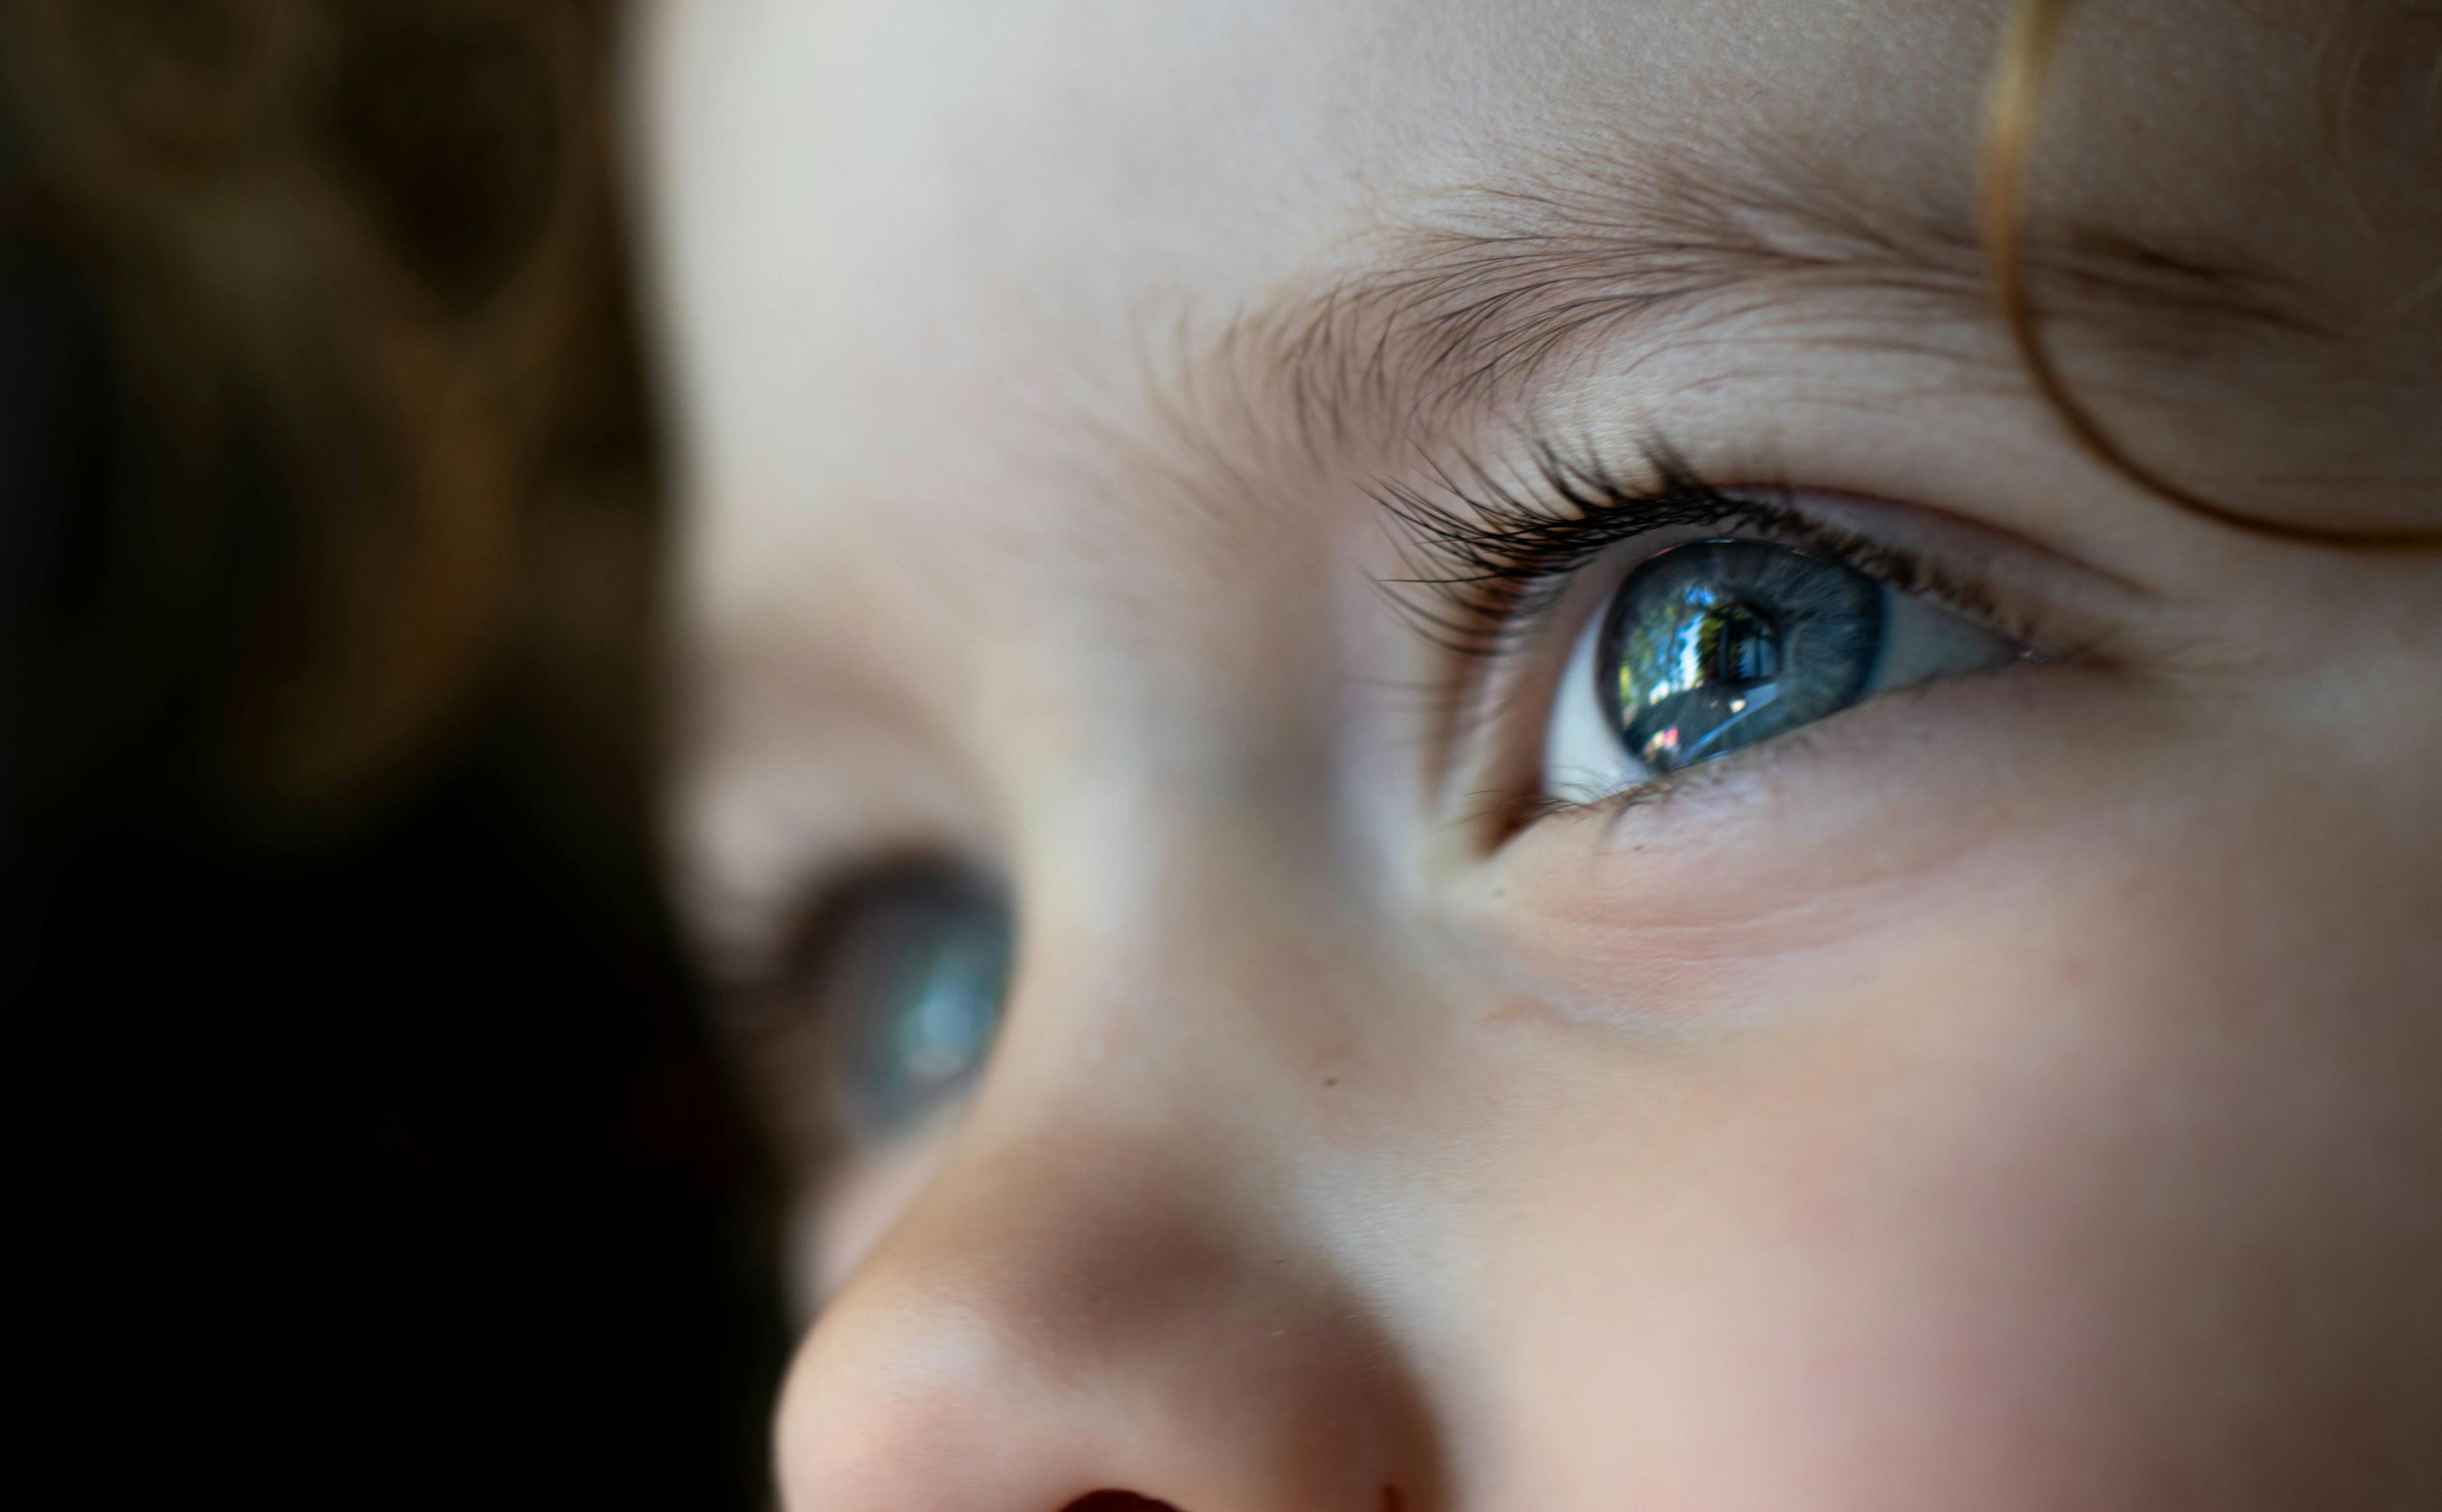 Child's eyes | Image credit: Jasmine - stock.adobe.com